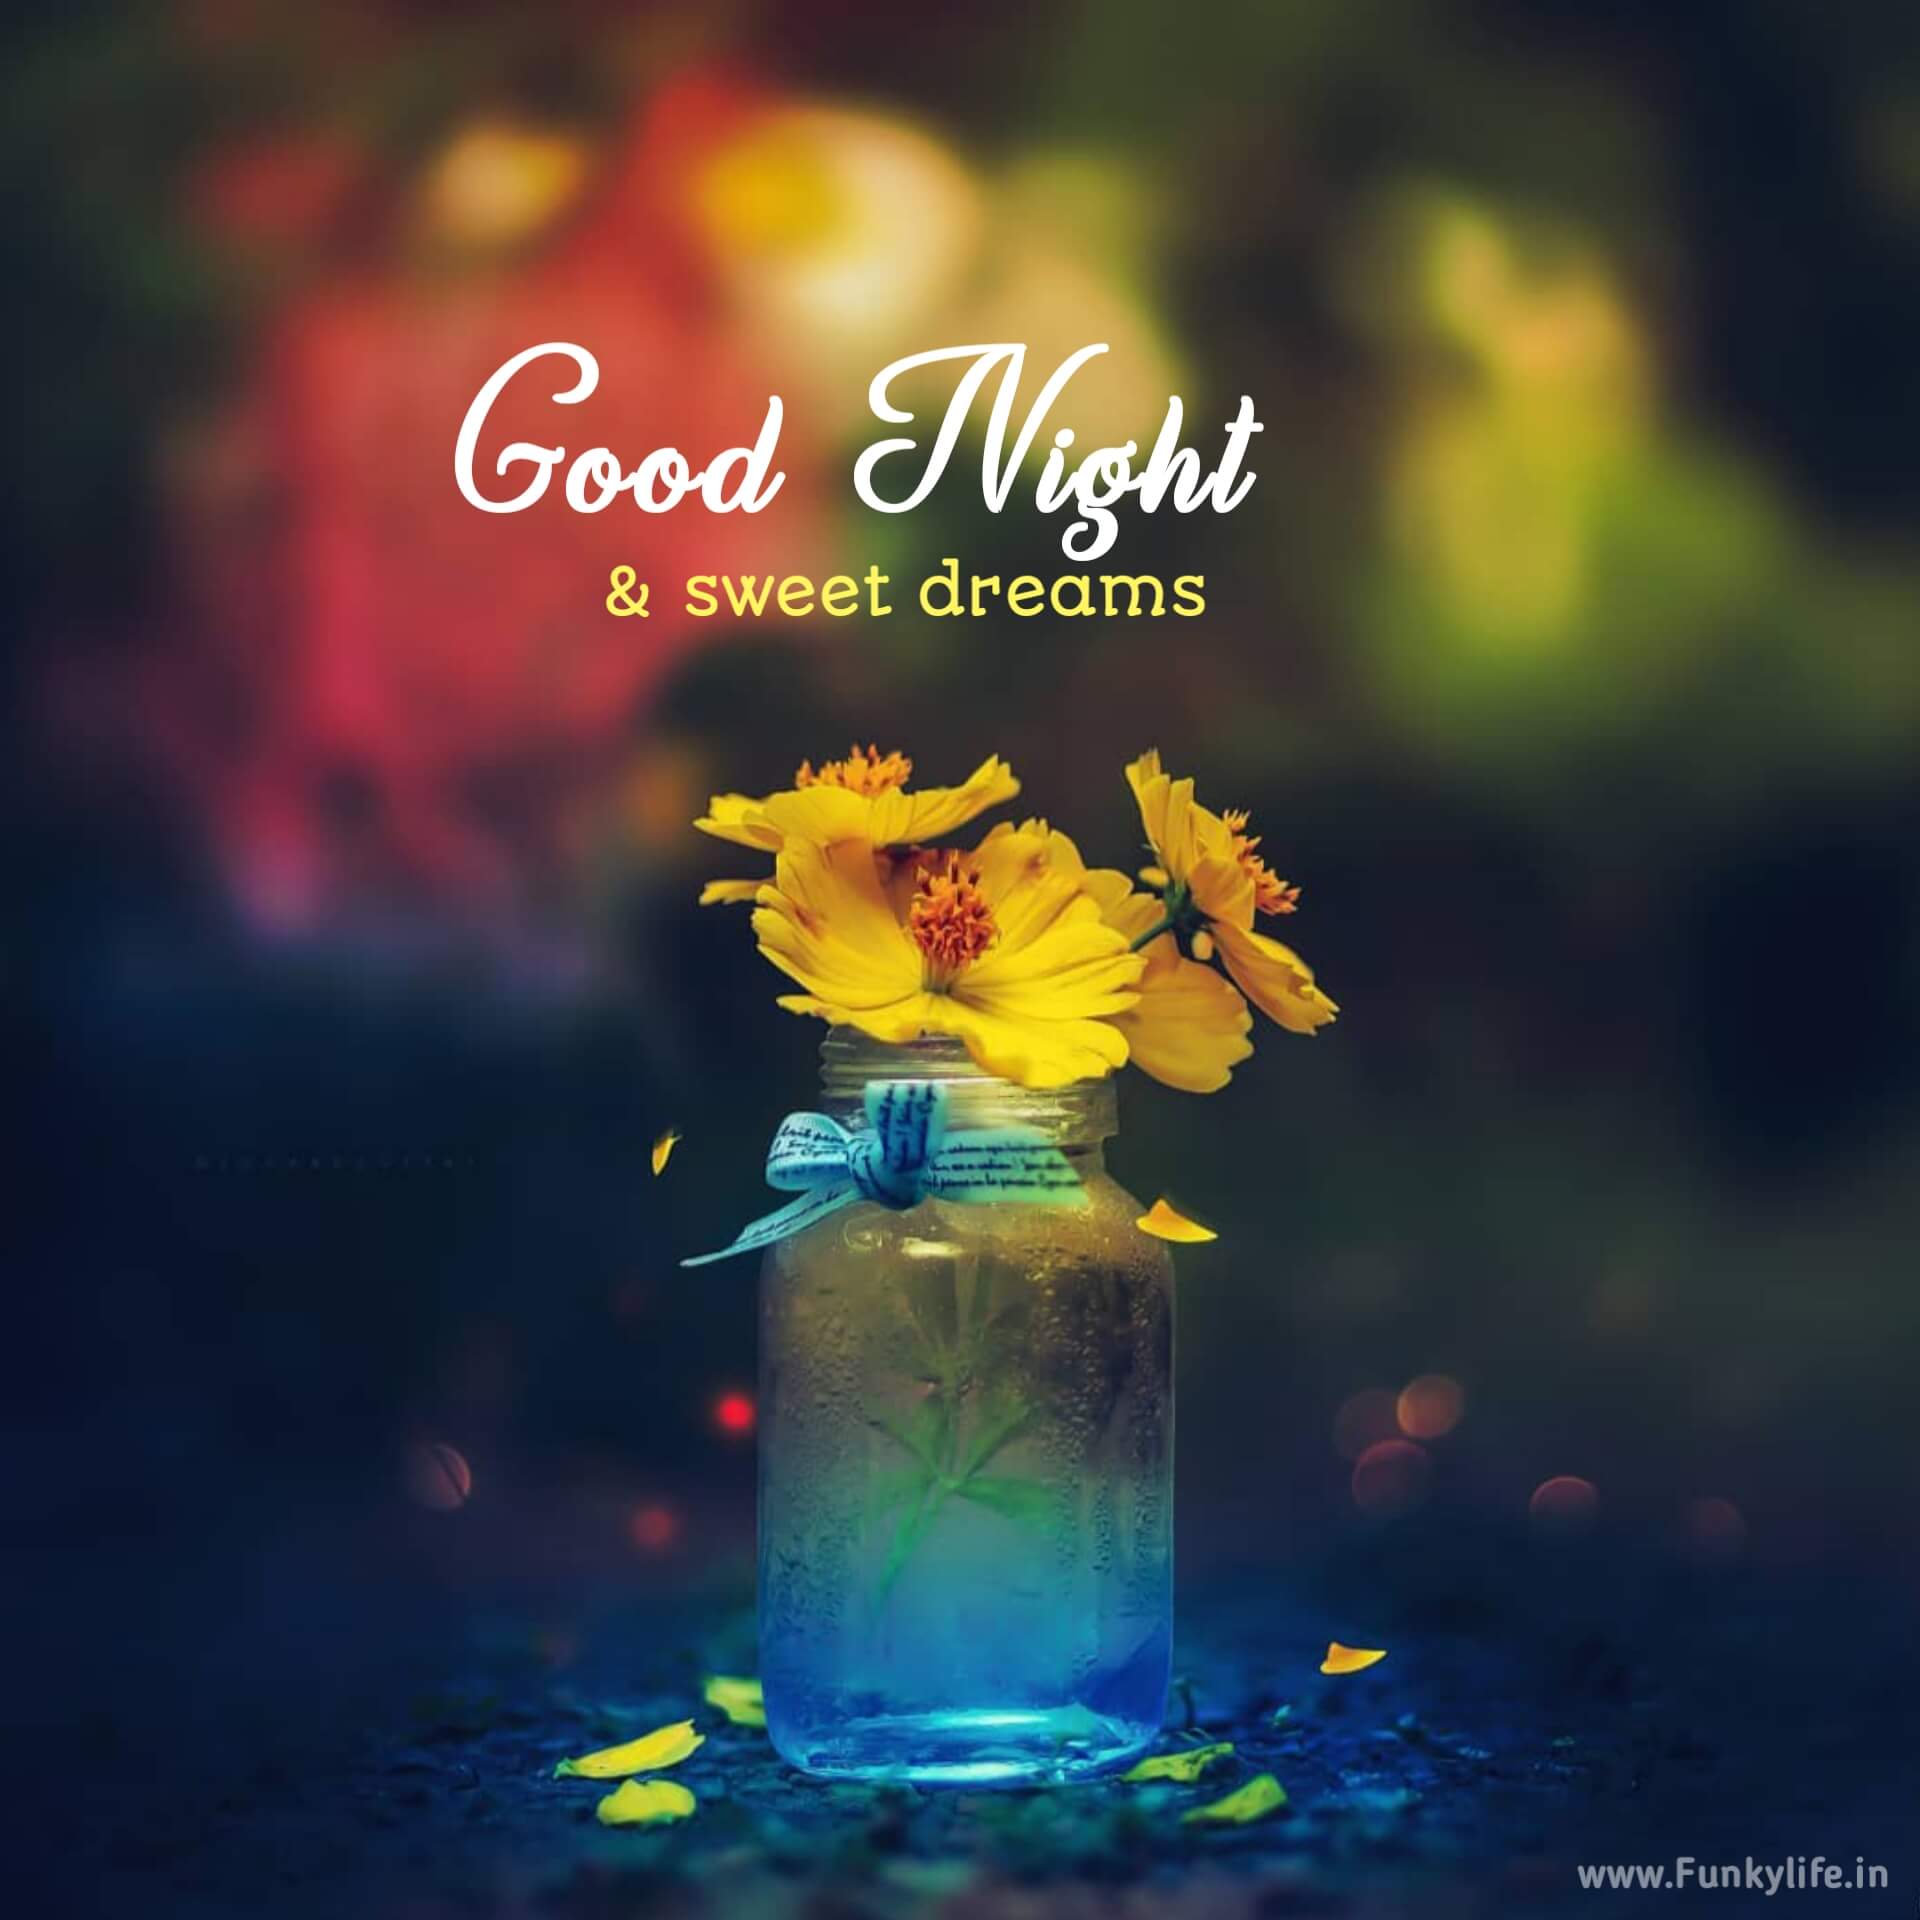 Good Night Wishes Image